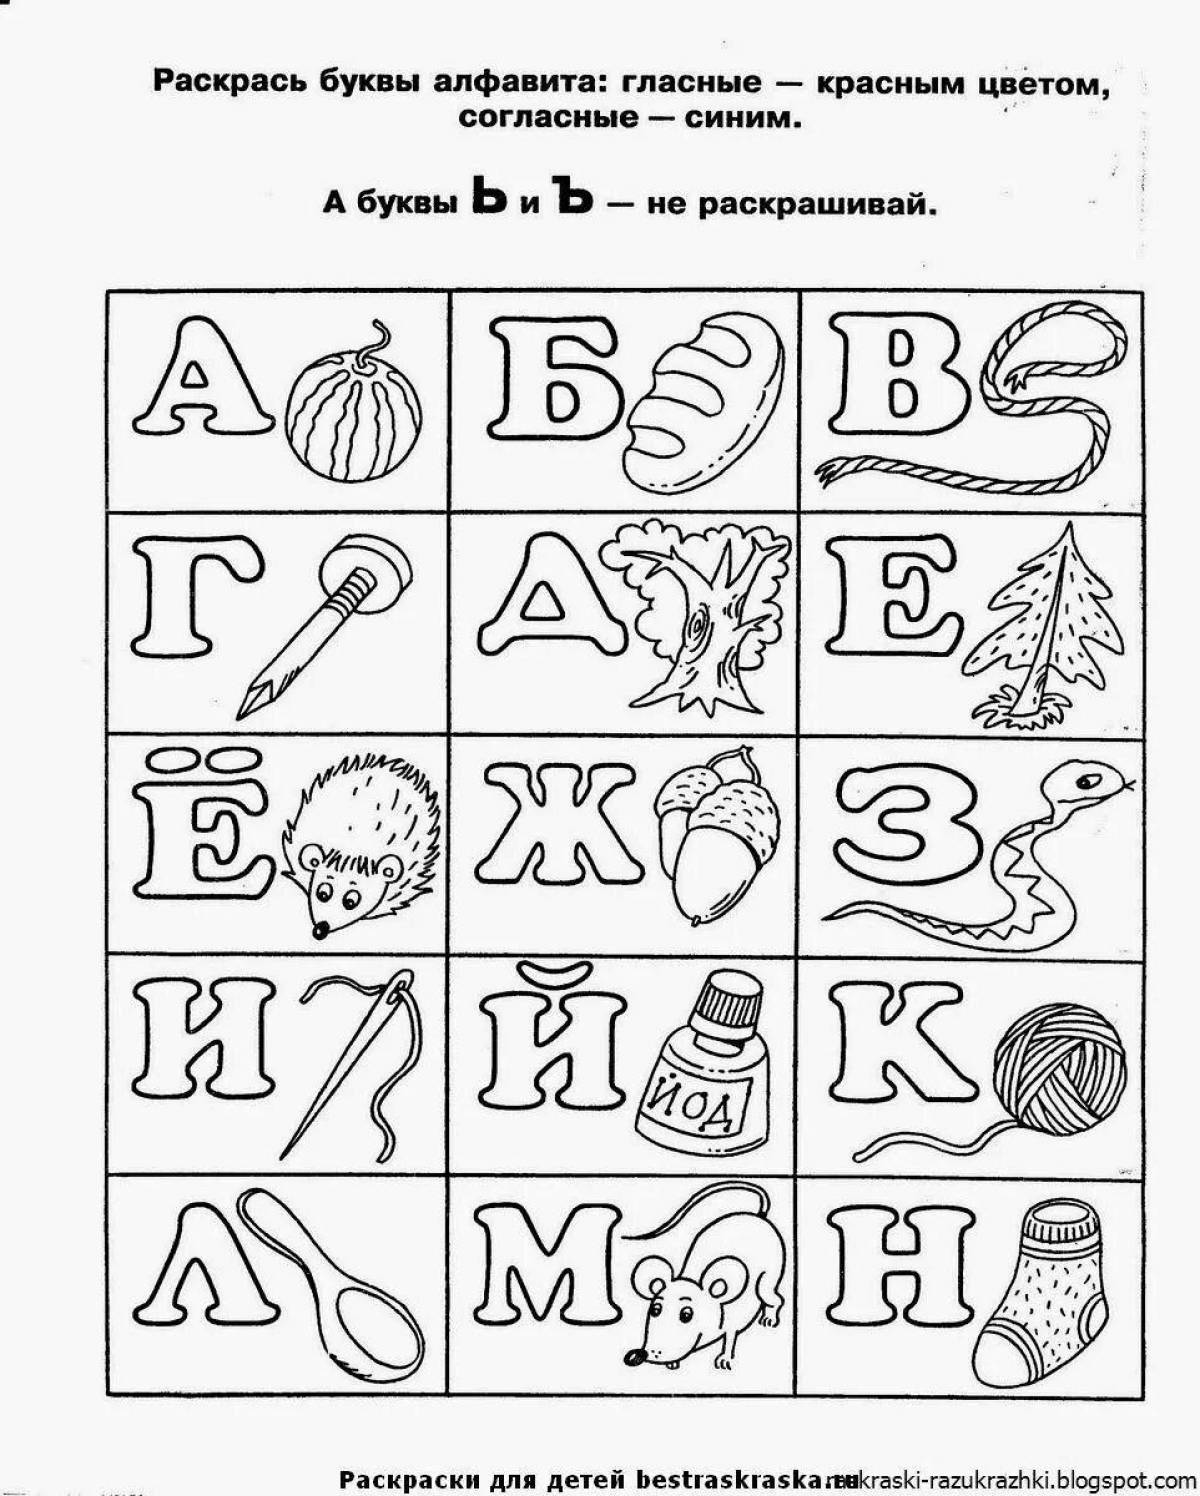 Alphabet for children 4 5 years old #6